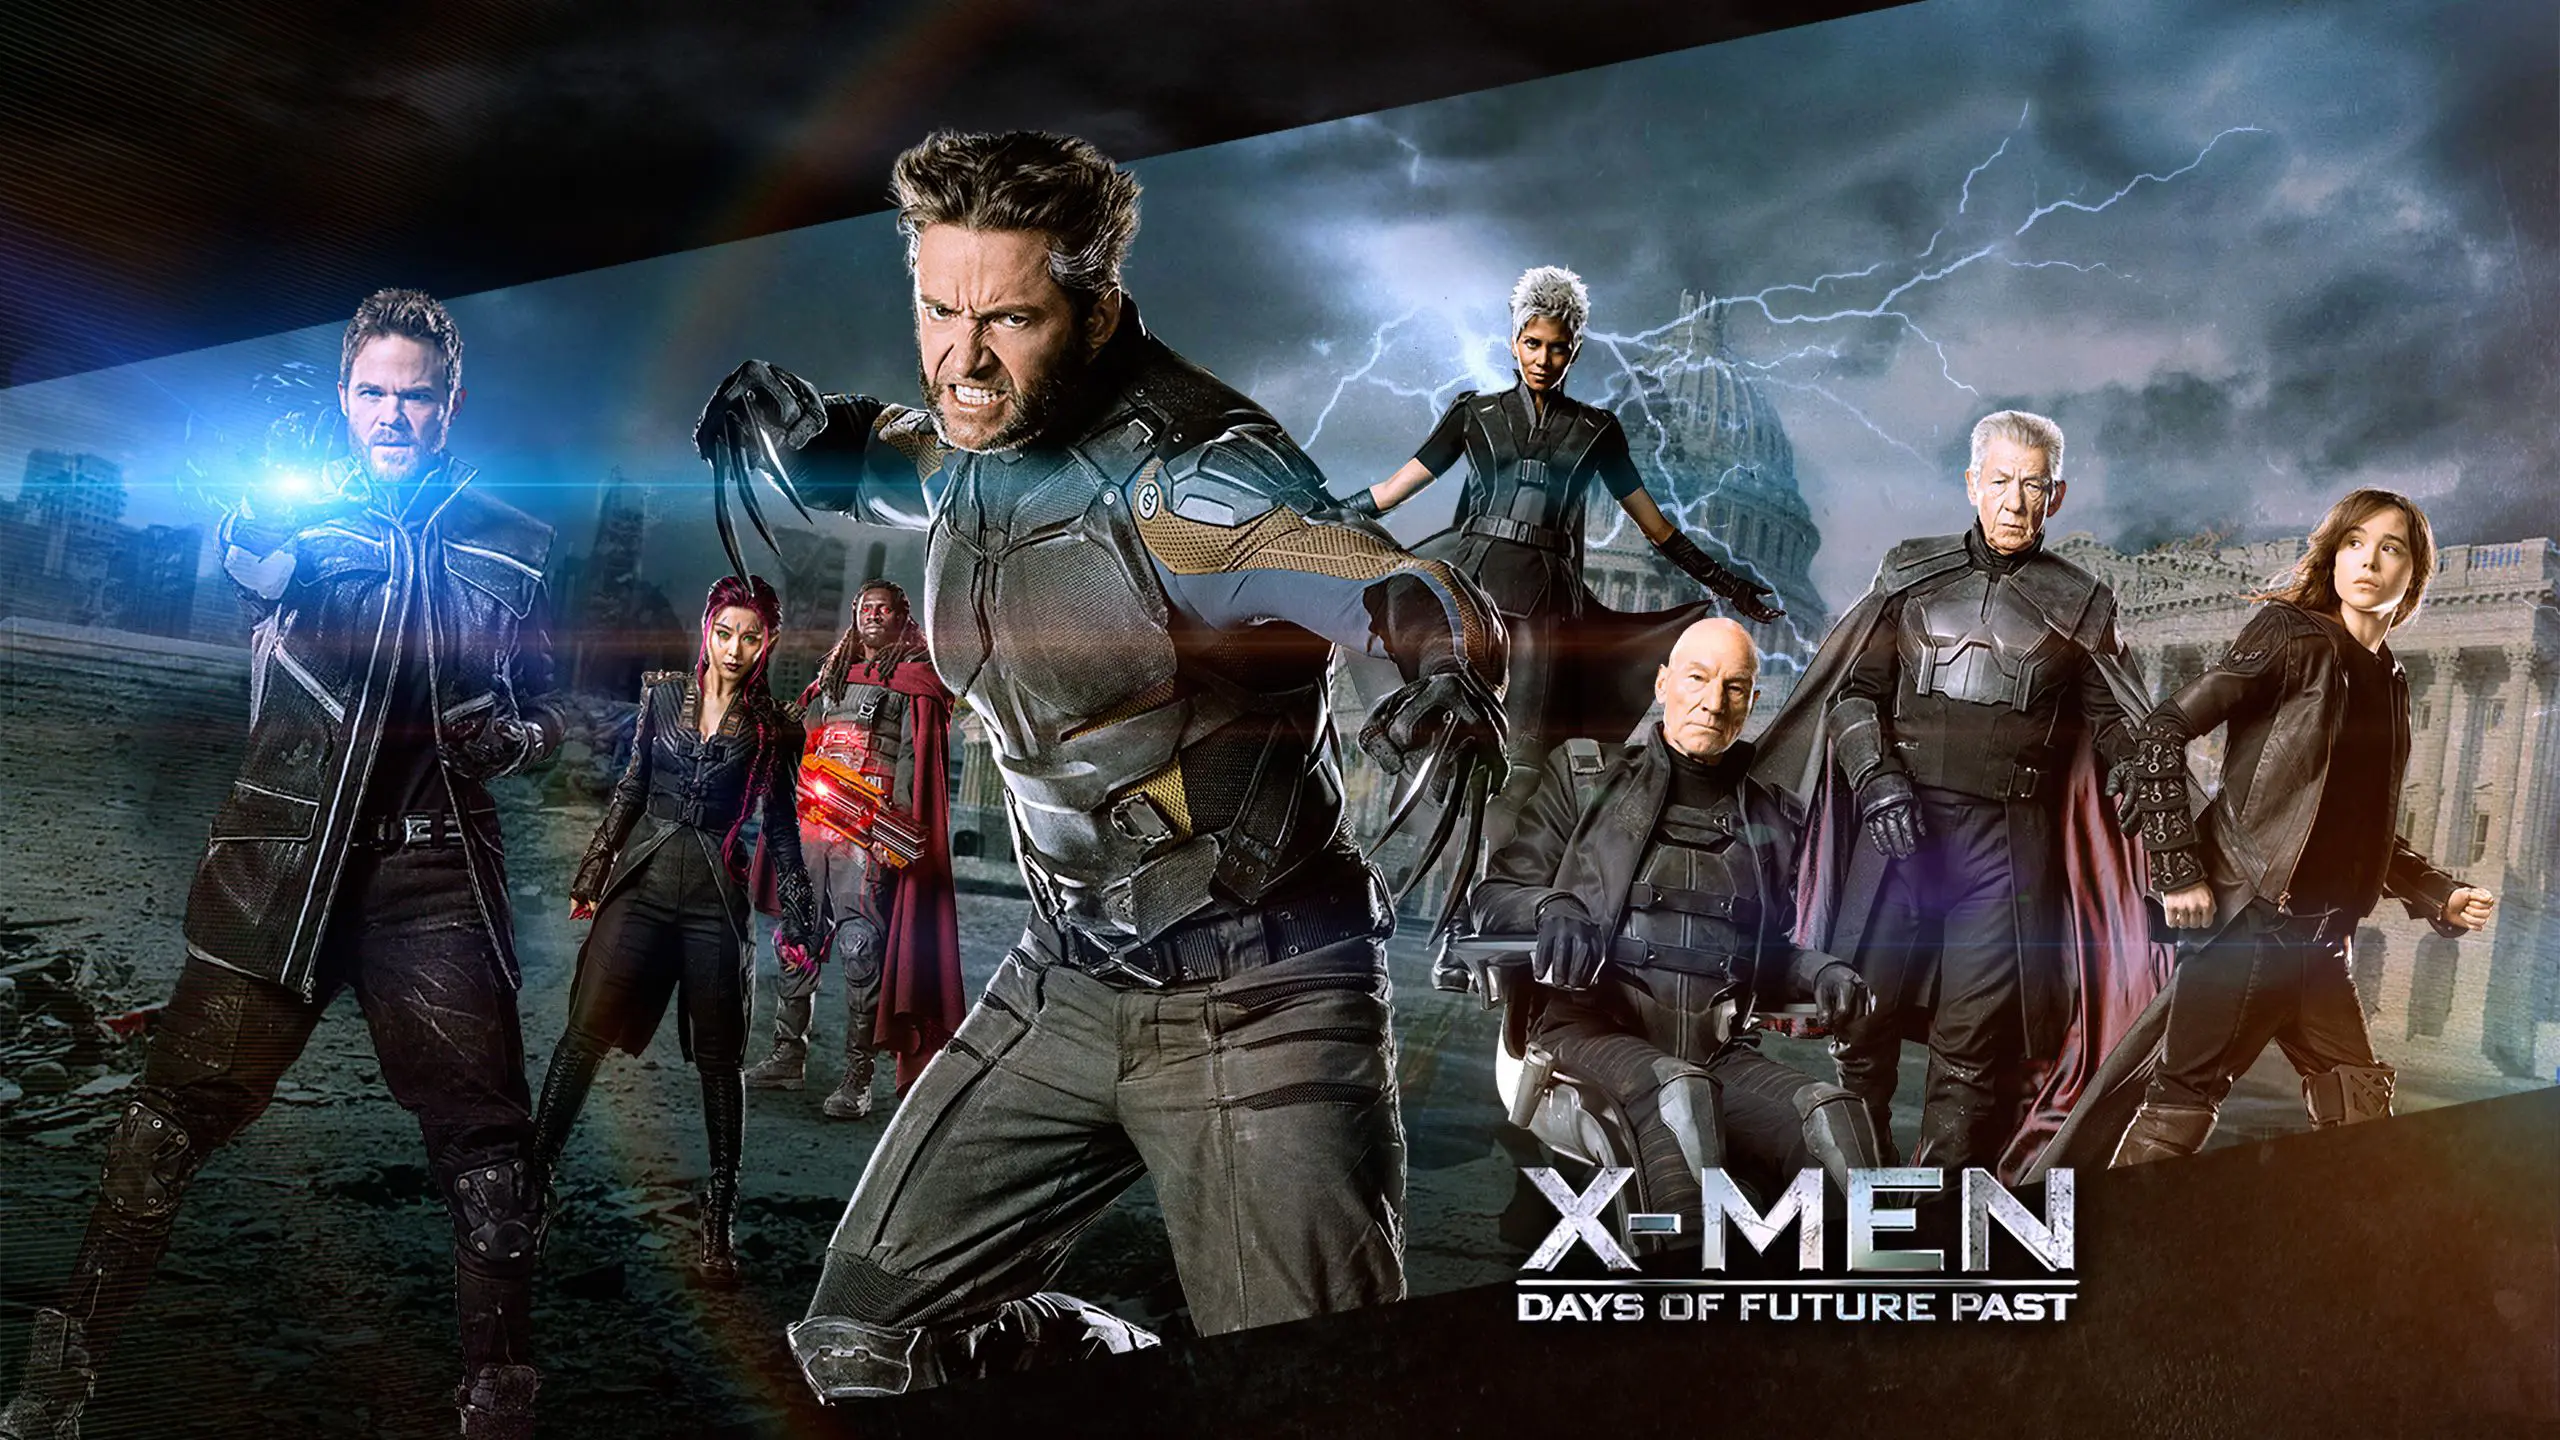 Movie X-Men Days of Future Past wallpaper 2 | Background Image